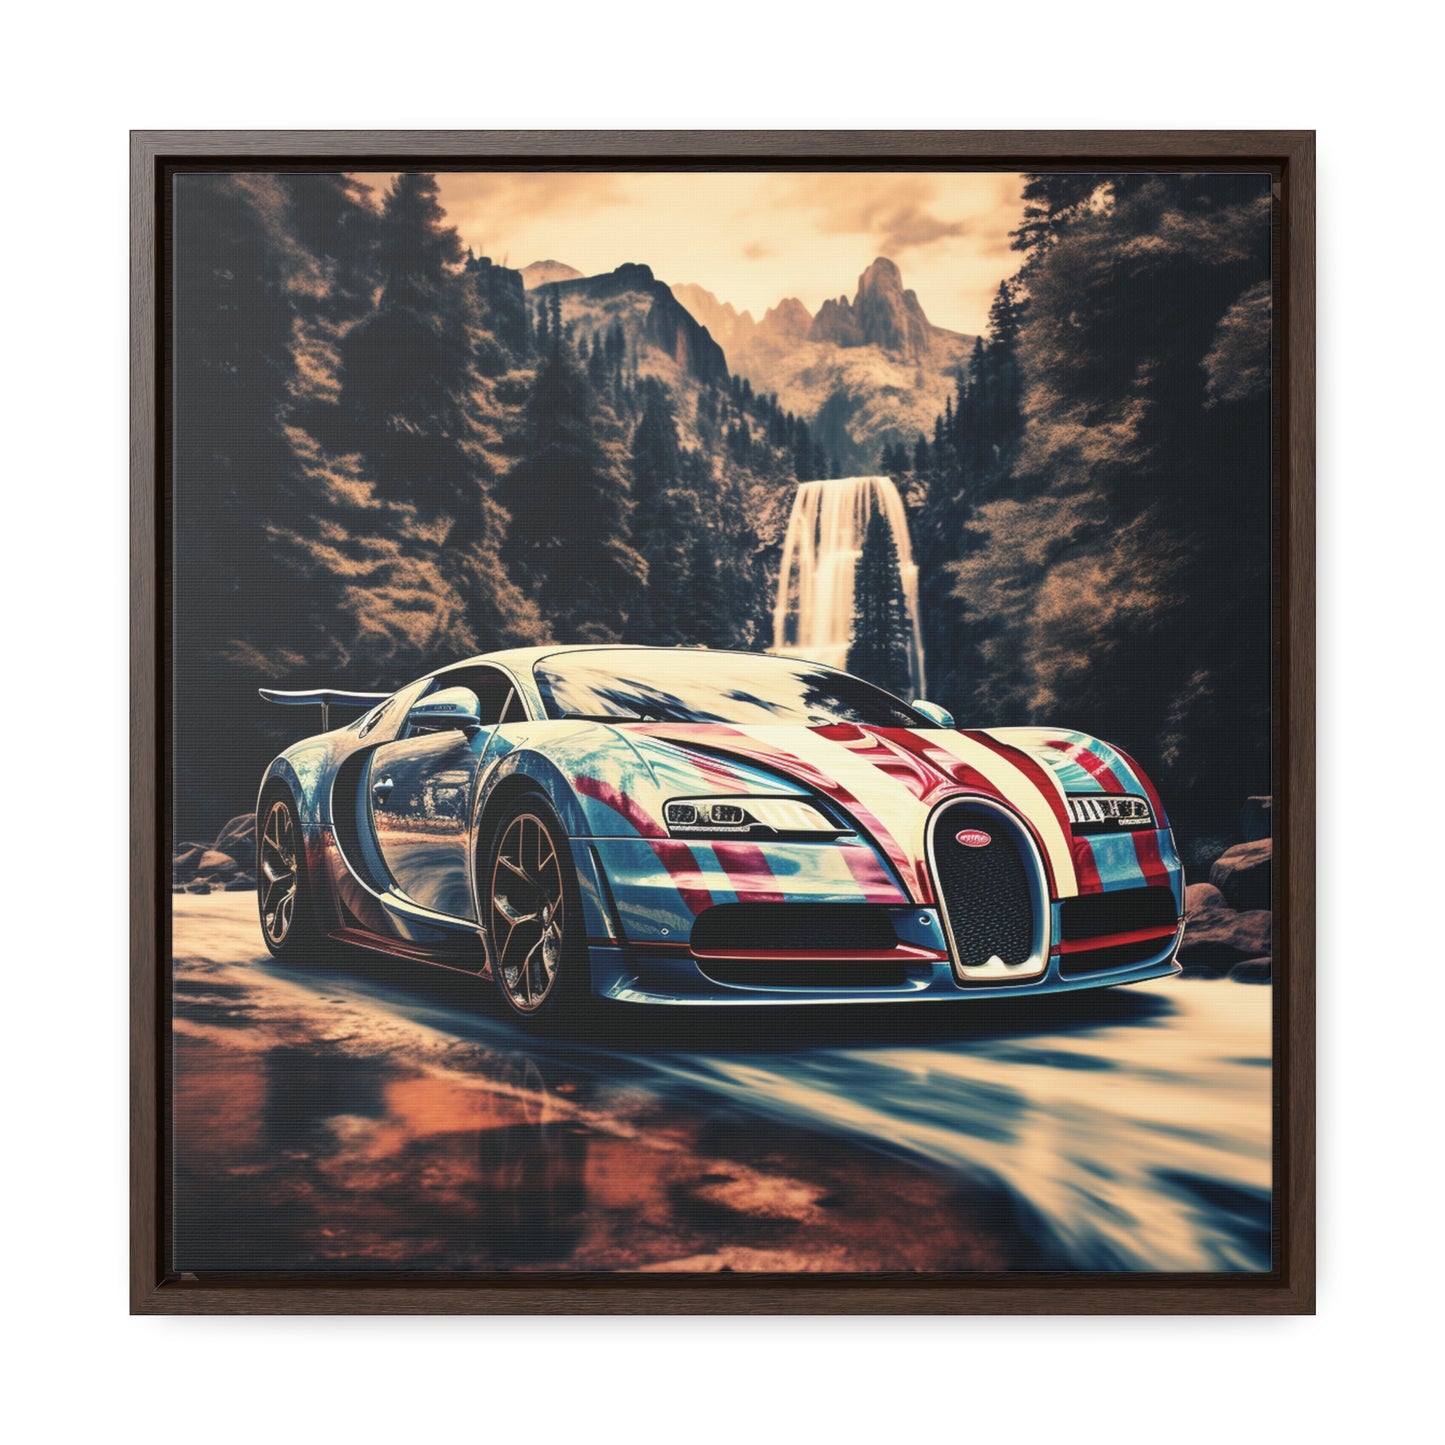 Gallery Canvas Wraps, Square Frame Bugatti Waterfall 1